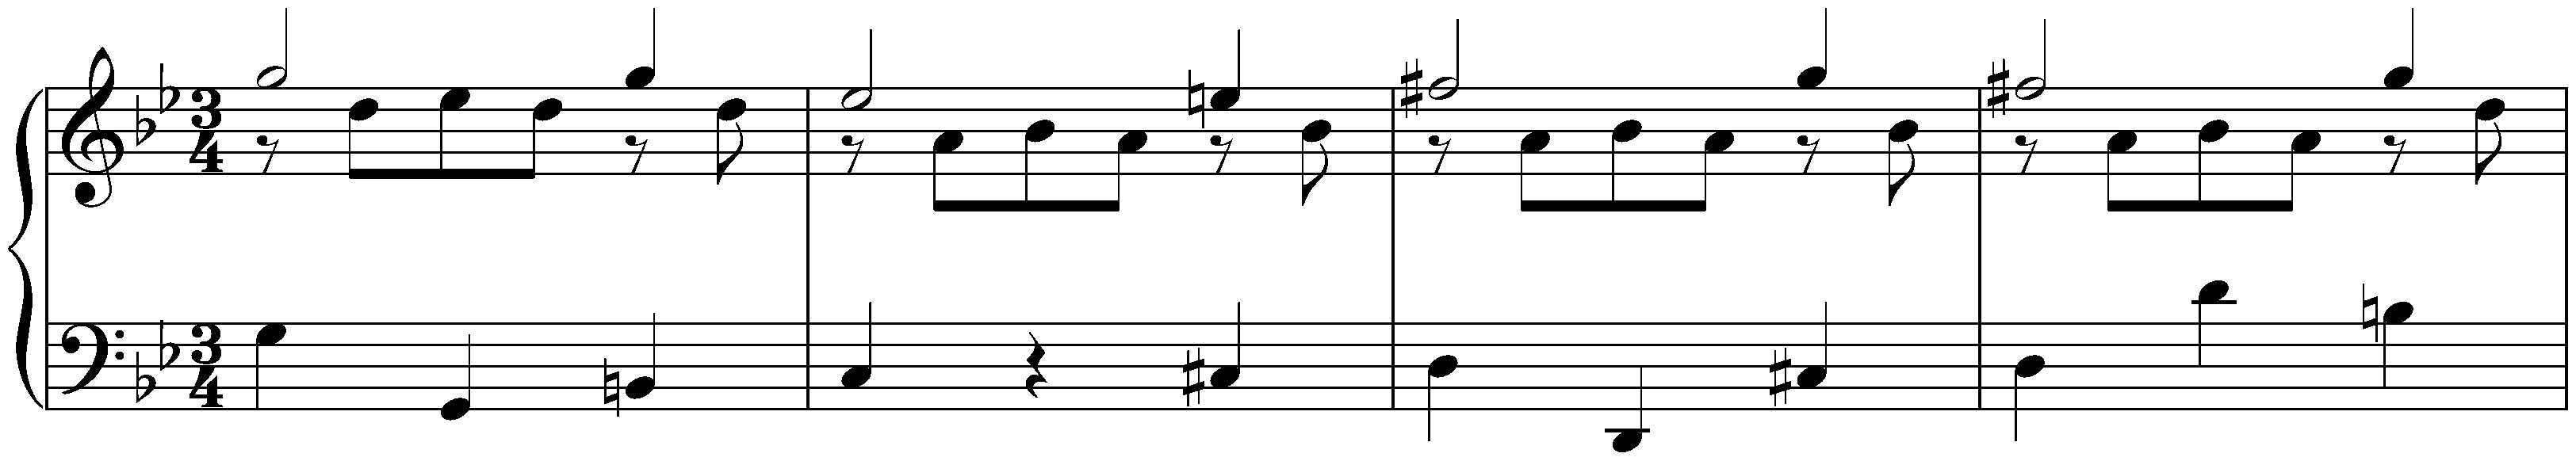 Sarabande in G minor, BWV 839